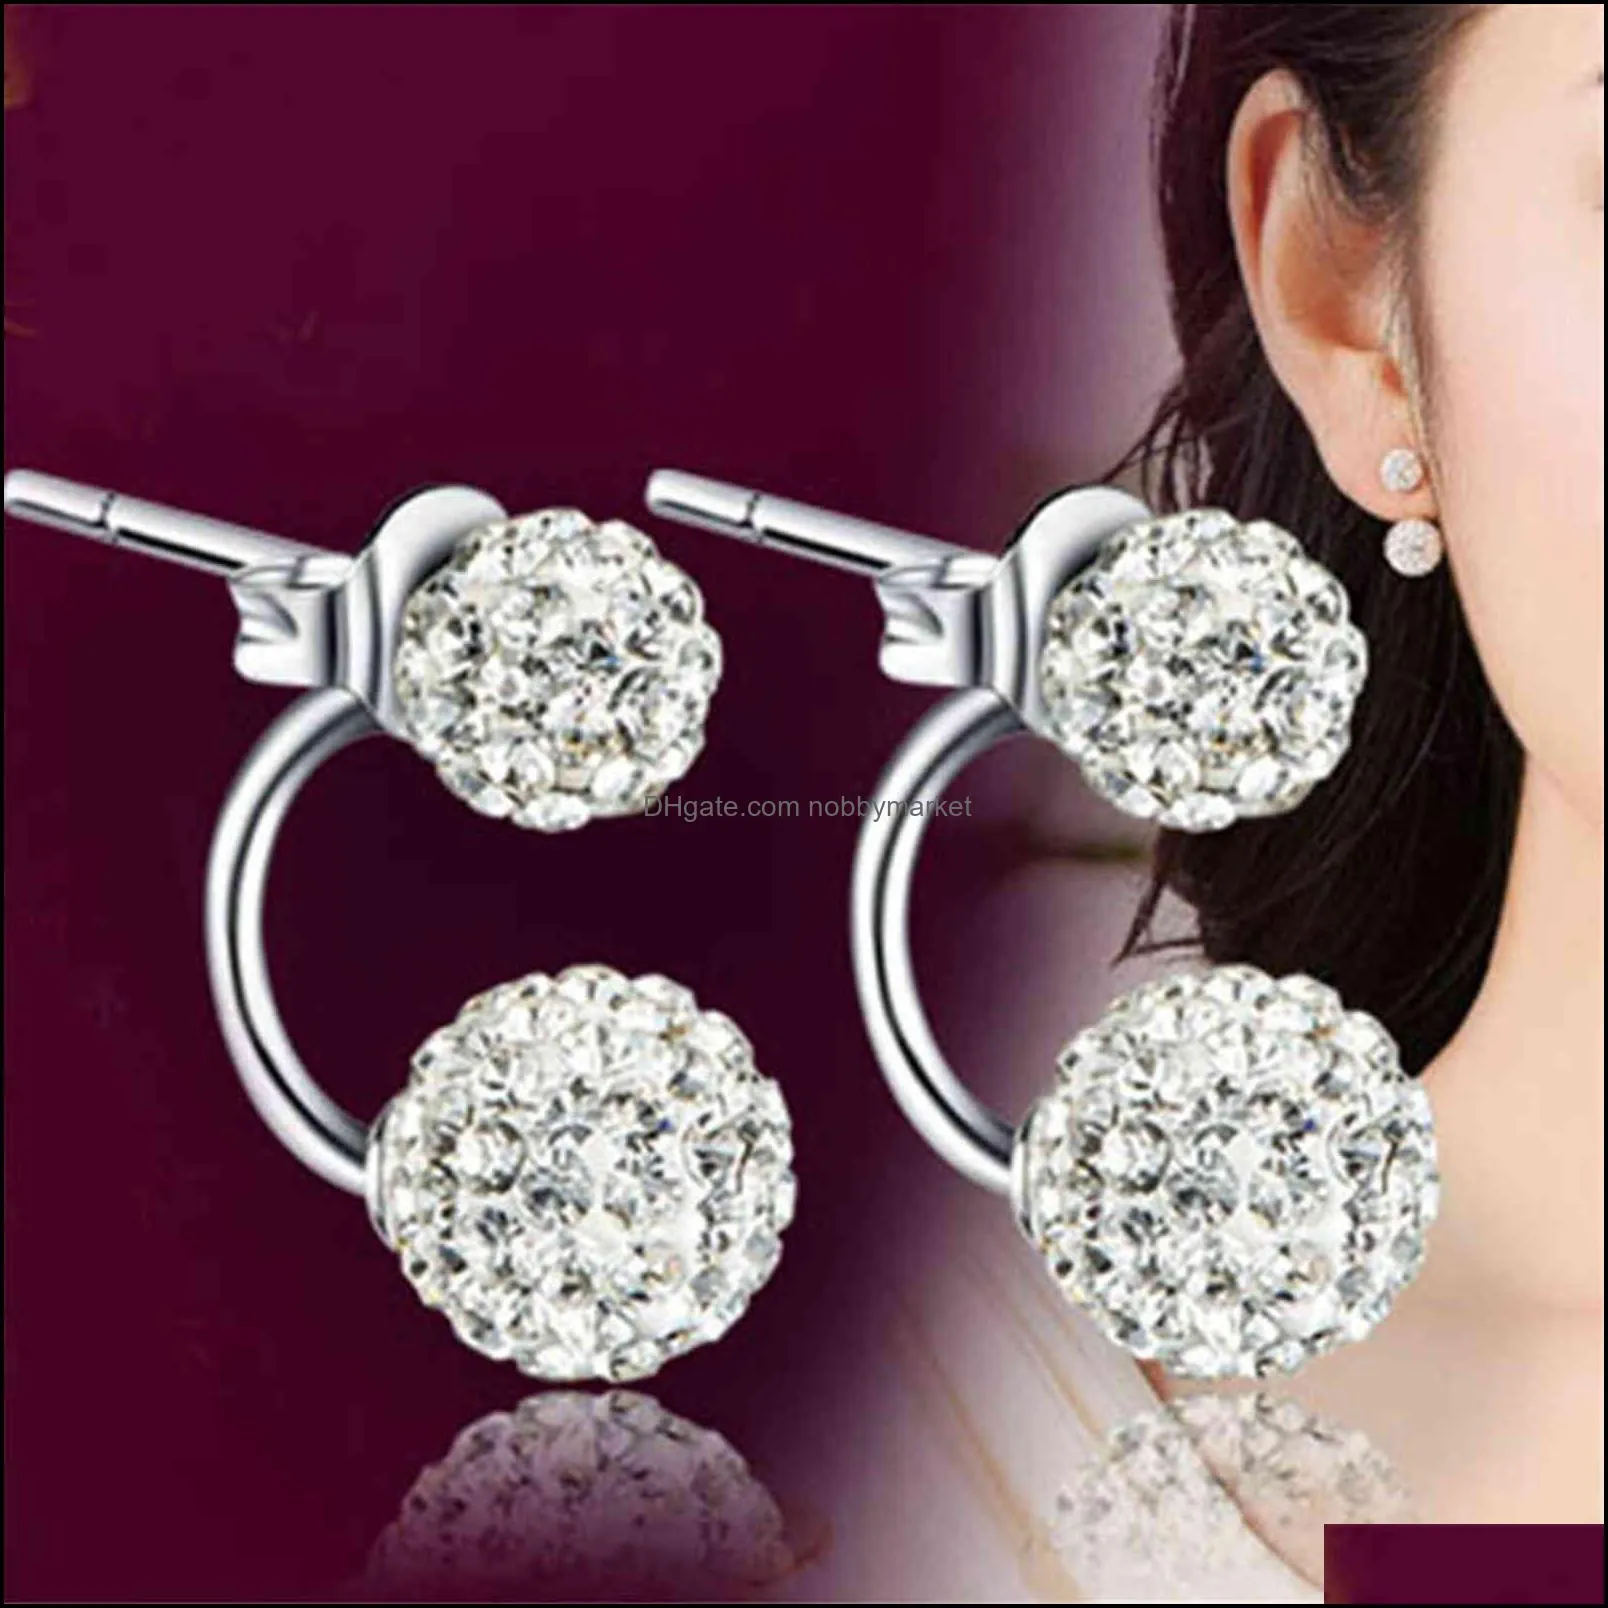 Nehzy 925 Sterling Silver New Jewelry Shambhala Luxury Zirconia Female Popular Original Brand of High-end Vintage Stud Earrings